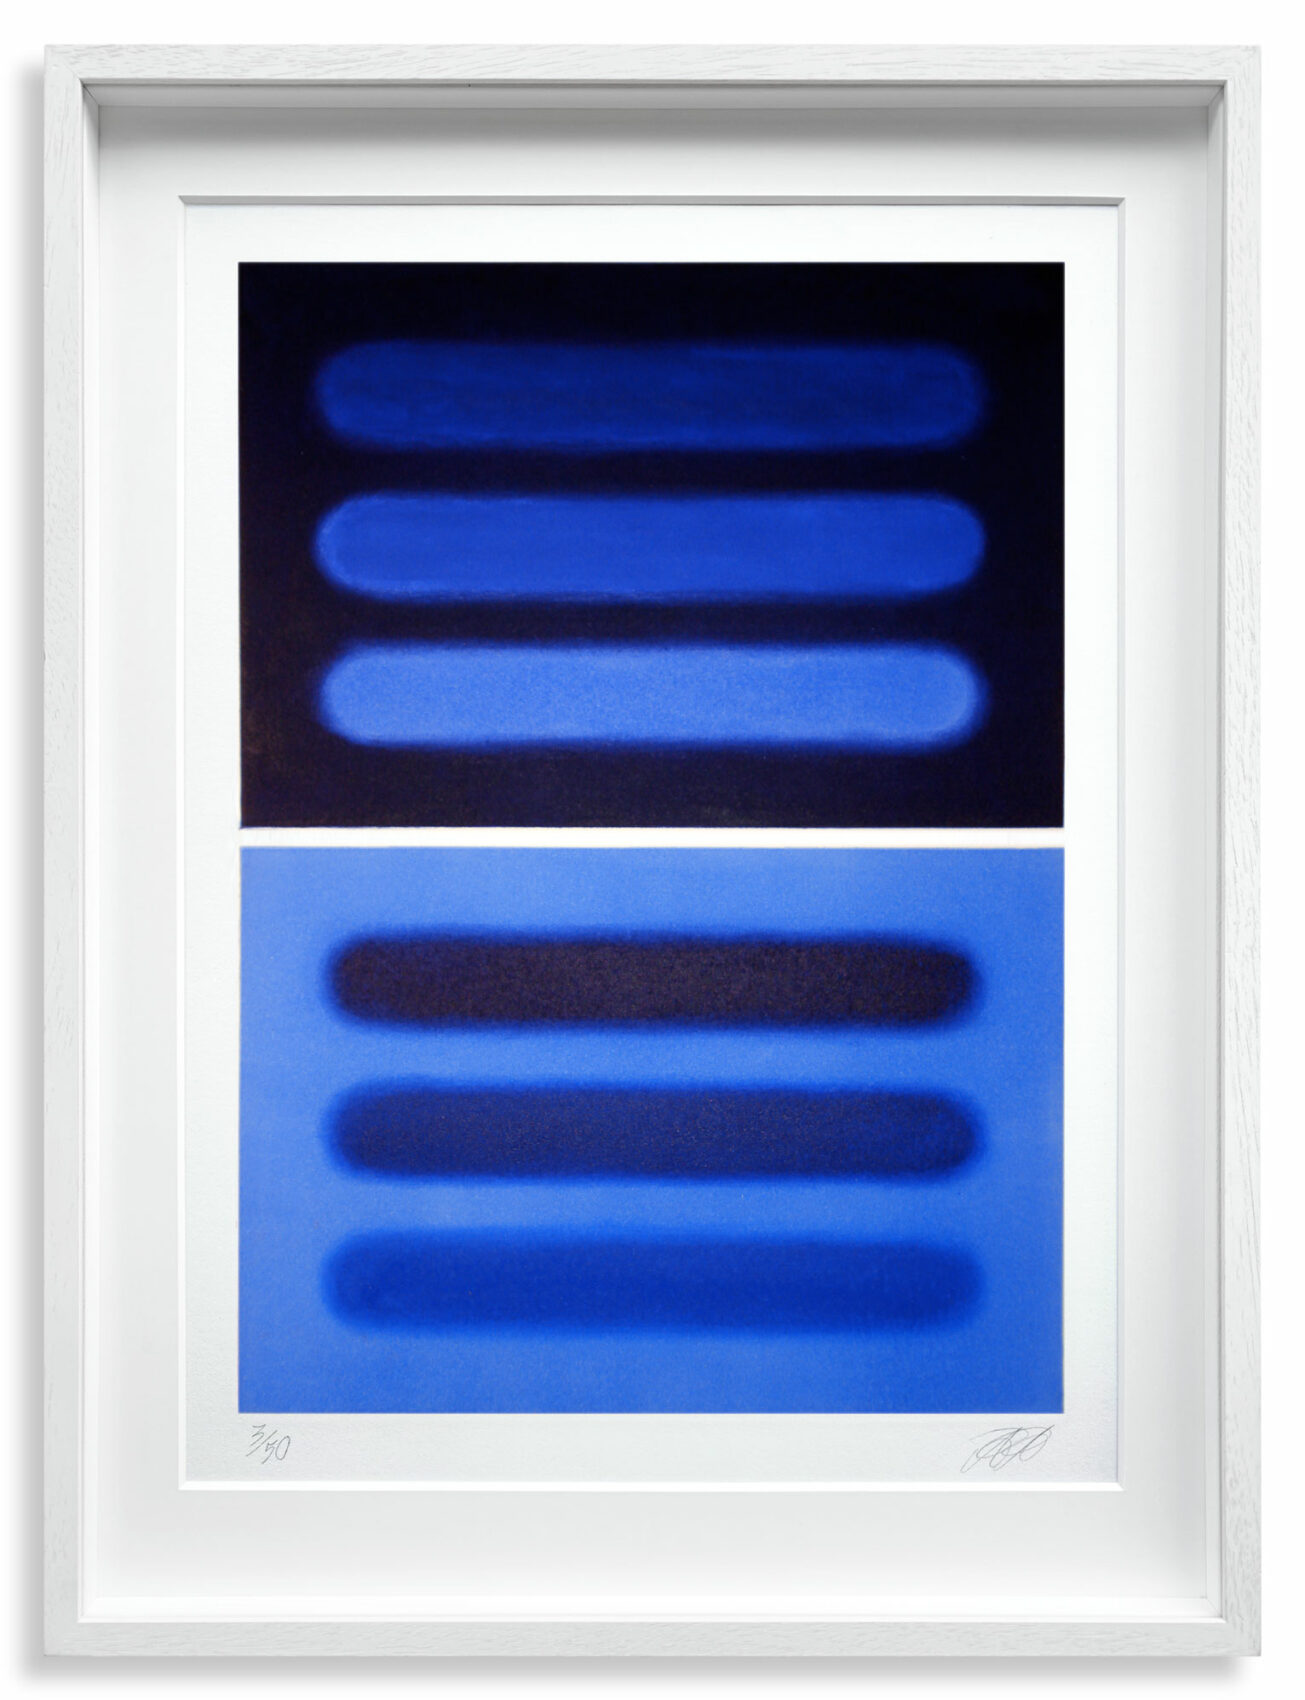 Dreipunkt_Edition_Alexander Arundell_Fuzzy Bars Blue_Mezzotinto_80 x 60 cm framed_€ 600 Kopie